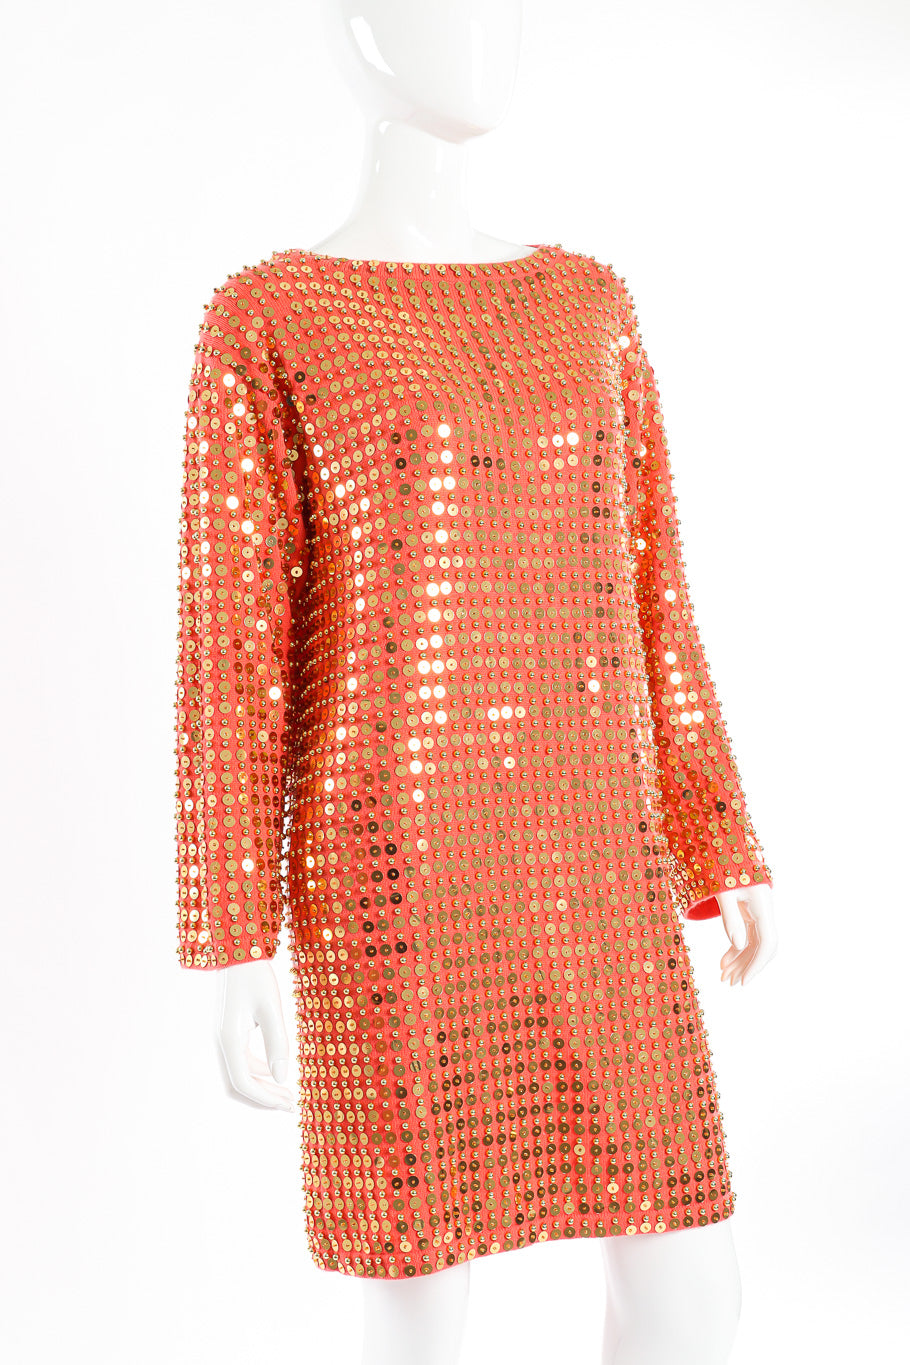 Cashmere sequin sweater dress by Michael Kors on mannequin front 3/4 shot @recessla